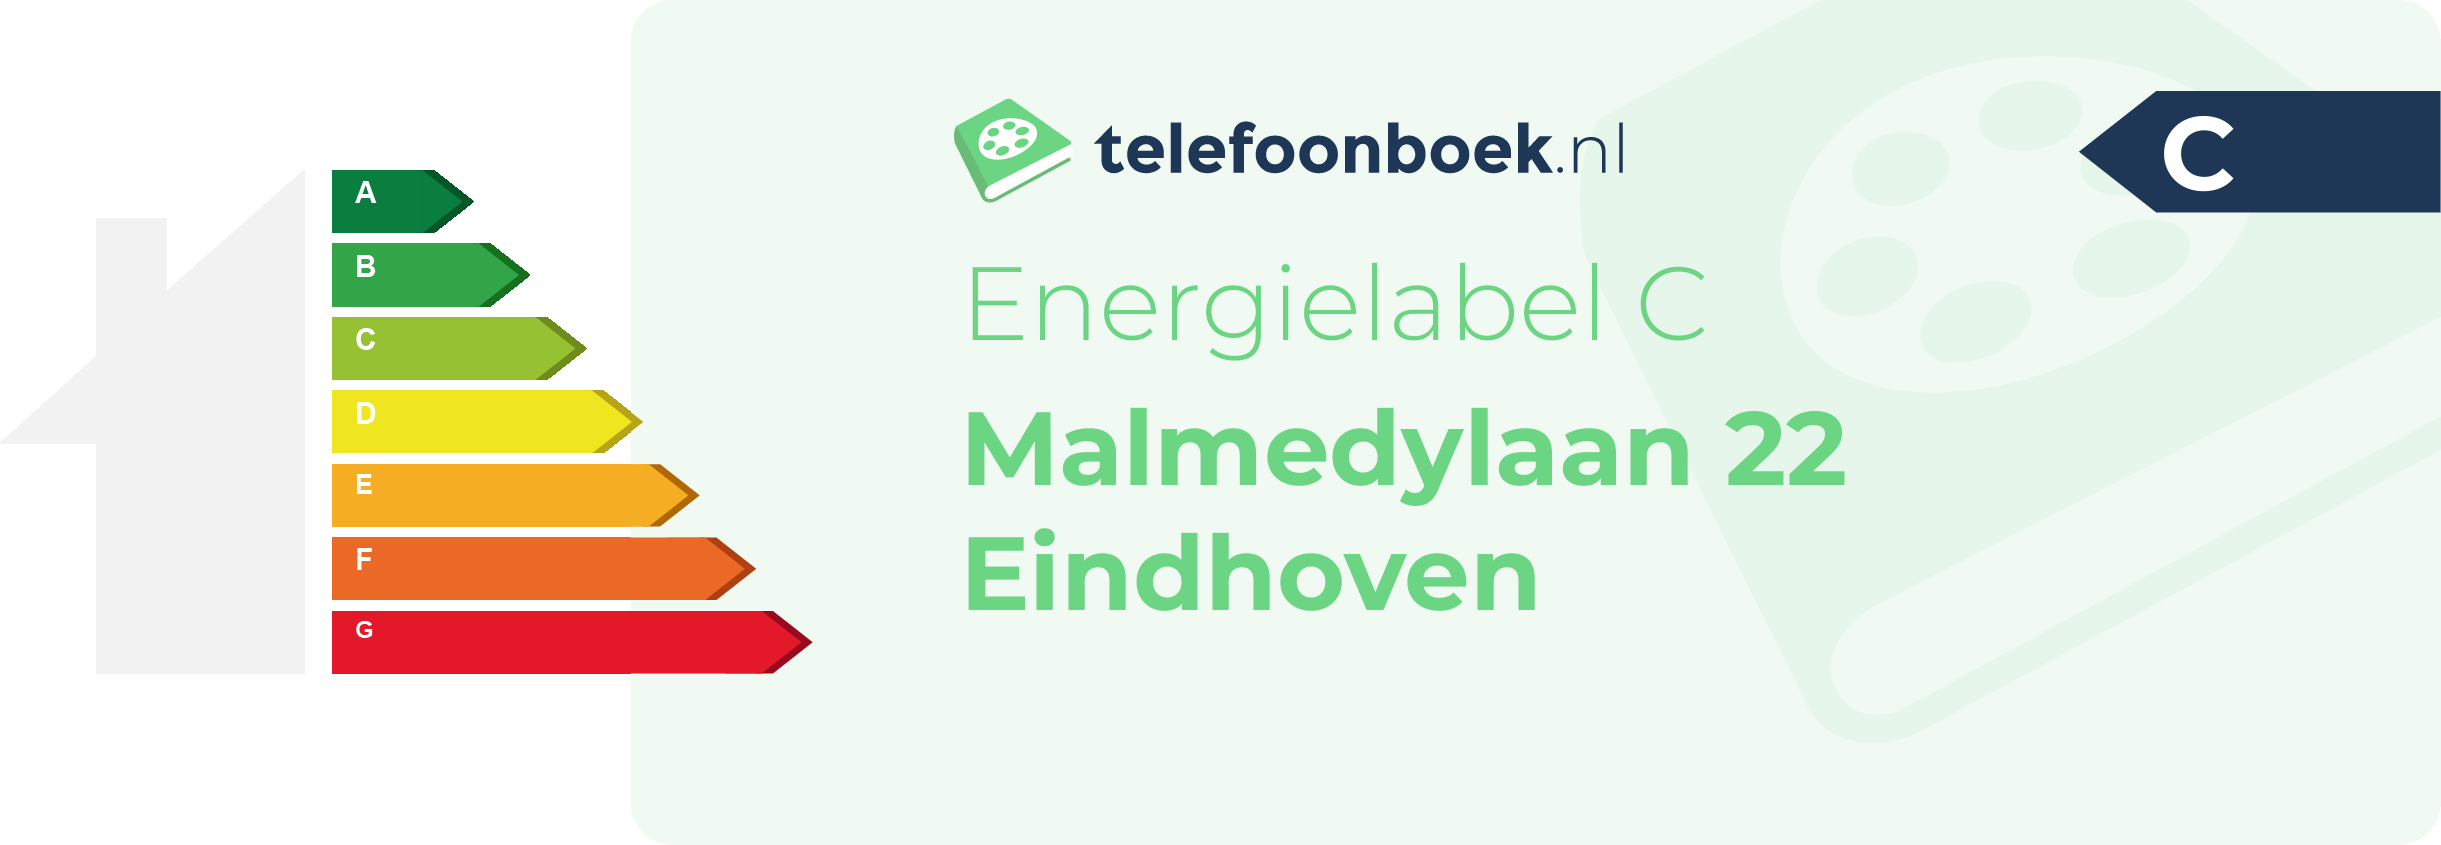 Energielabel Malmedylaan 22 Eindhoven